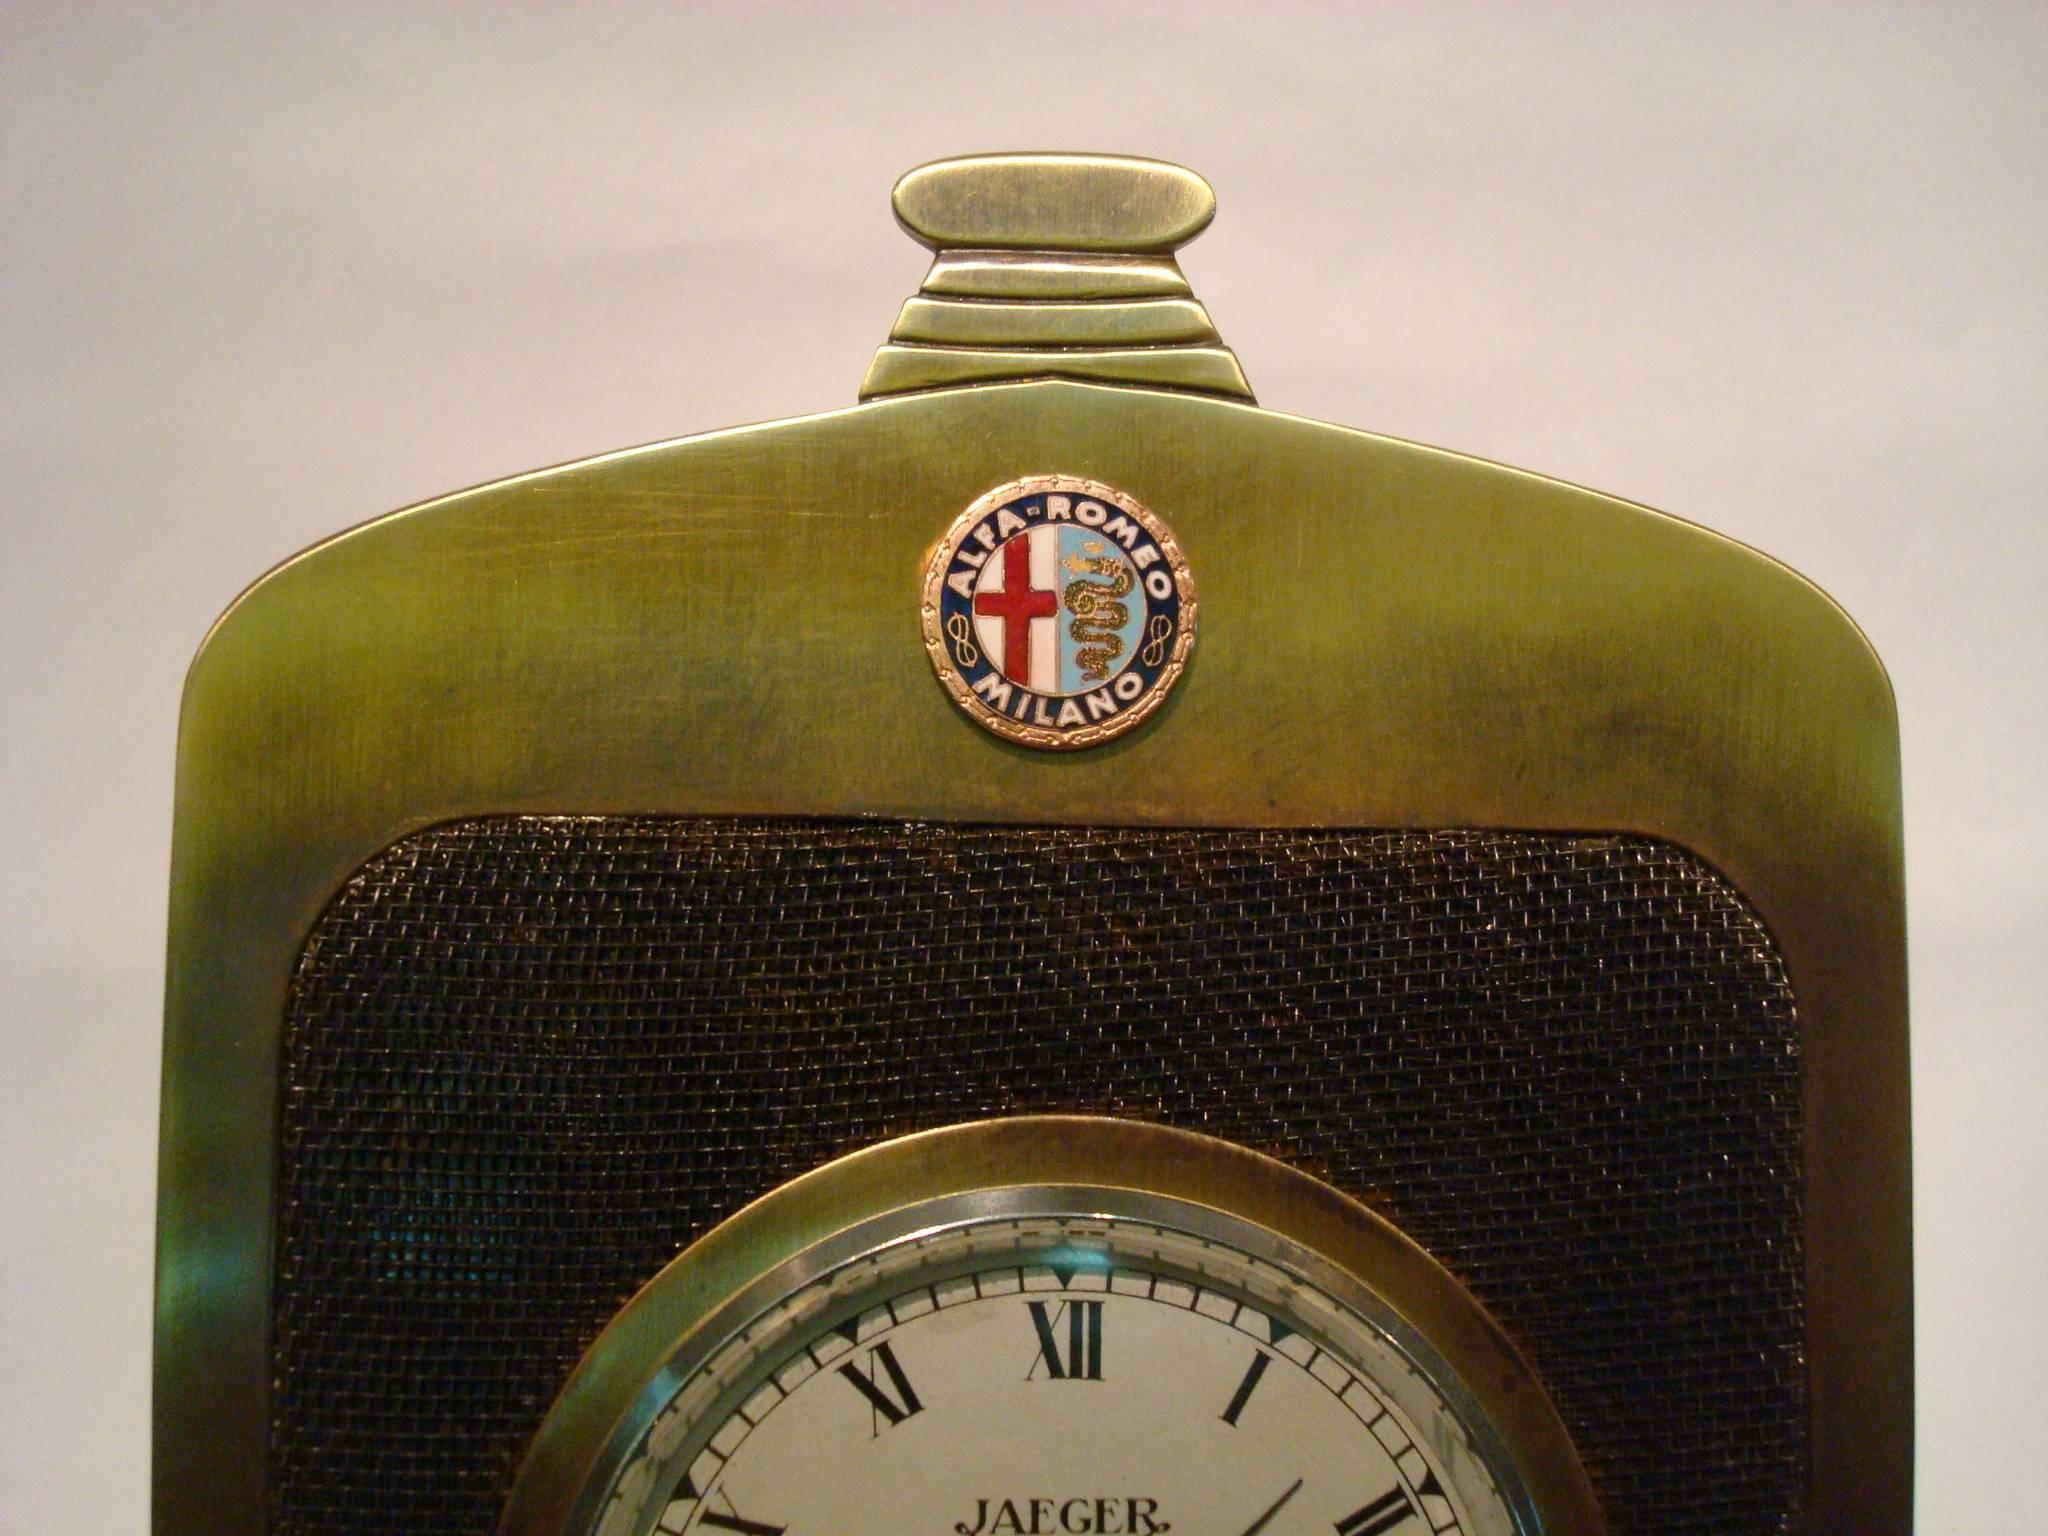 Alfa Romeo Classic Car Radiator Desk Clock, Jaeger, 1920er Jahre. Automobilia im Angebot 1